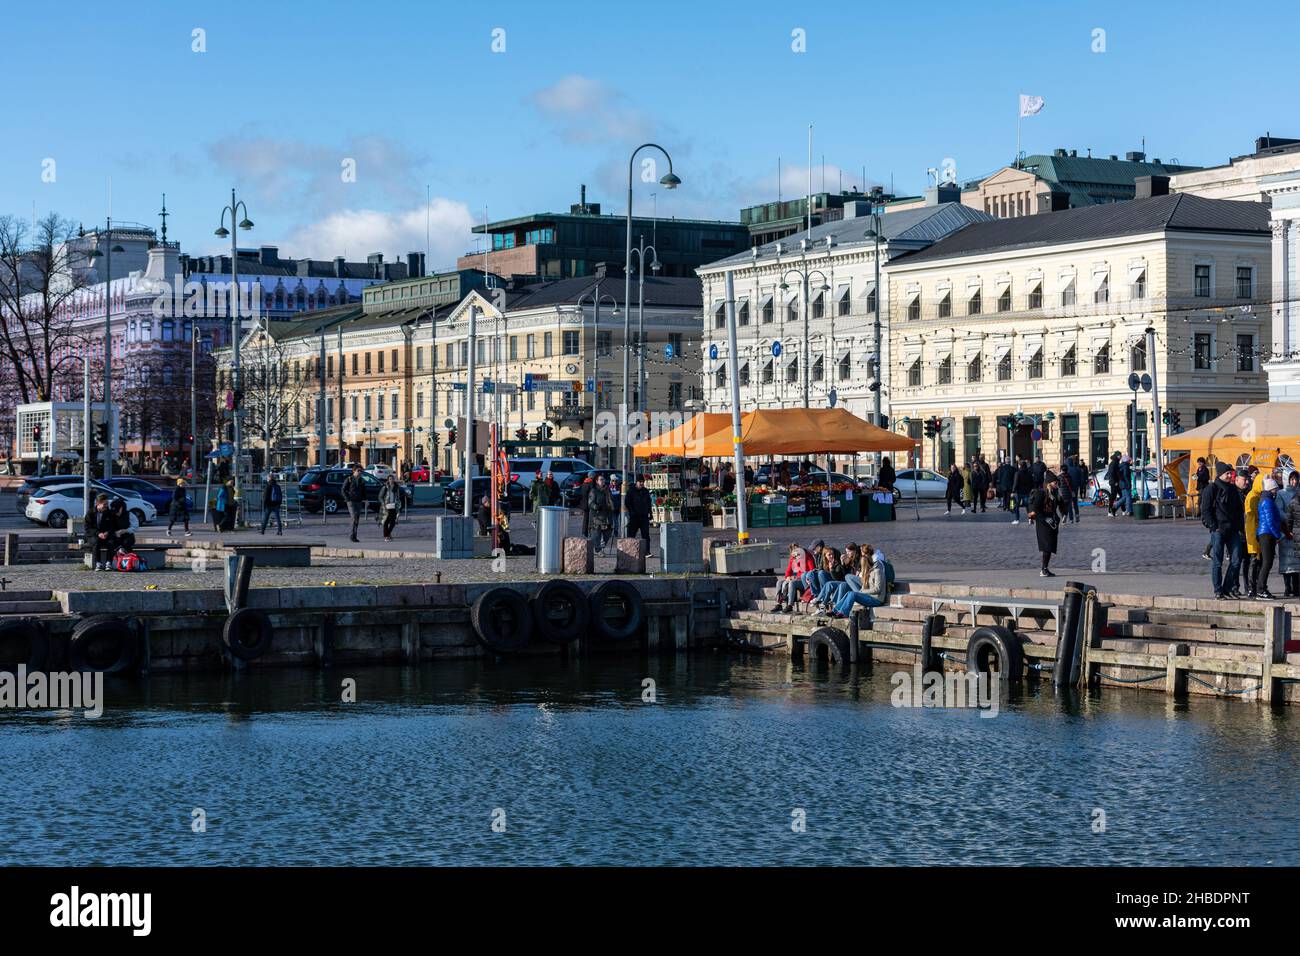 Kolera-allas by Market Square or Kauppatori in Helsinki, Finland Stock Photo